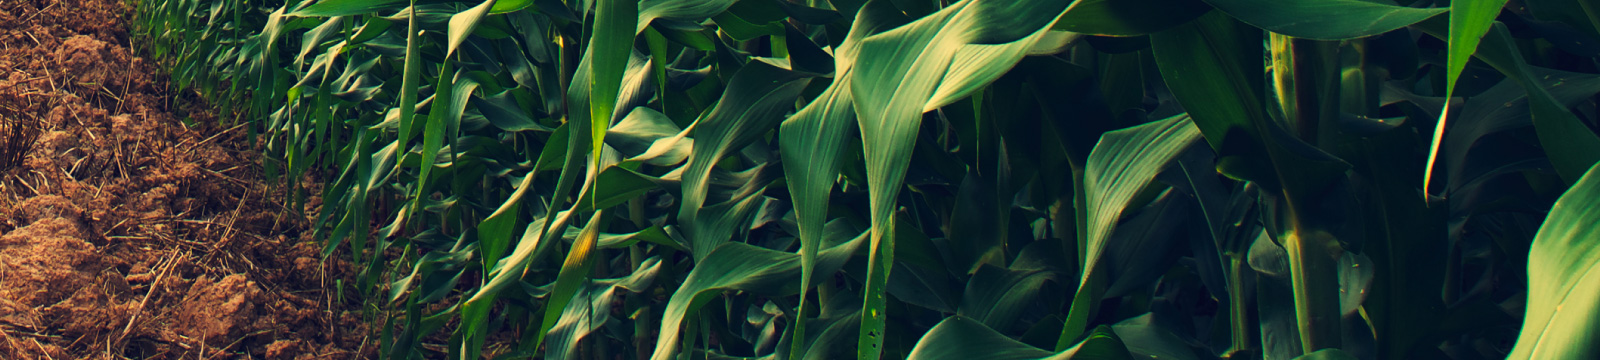 Image of corn.